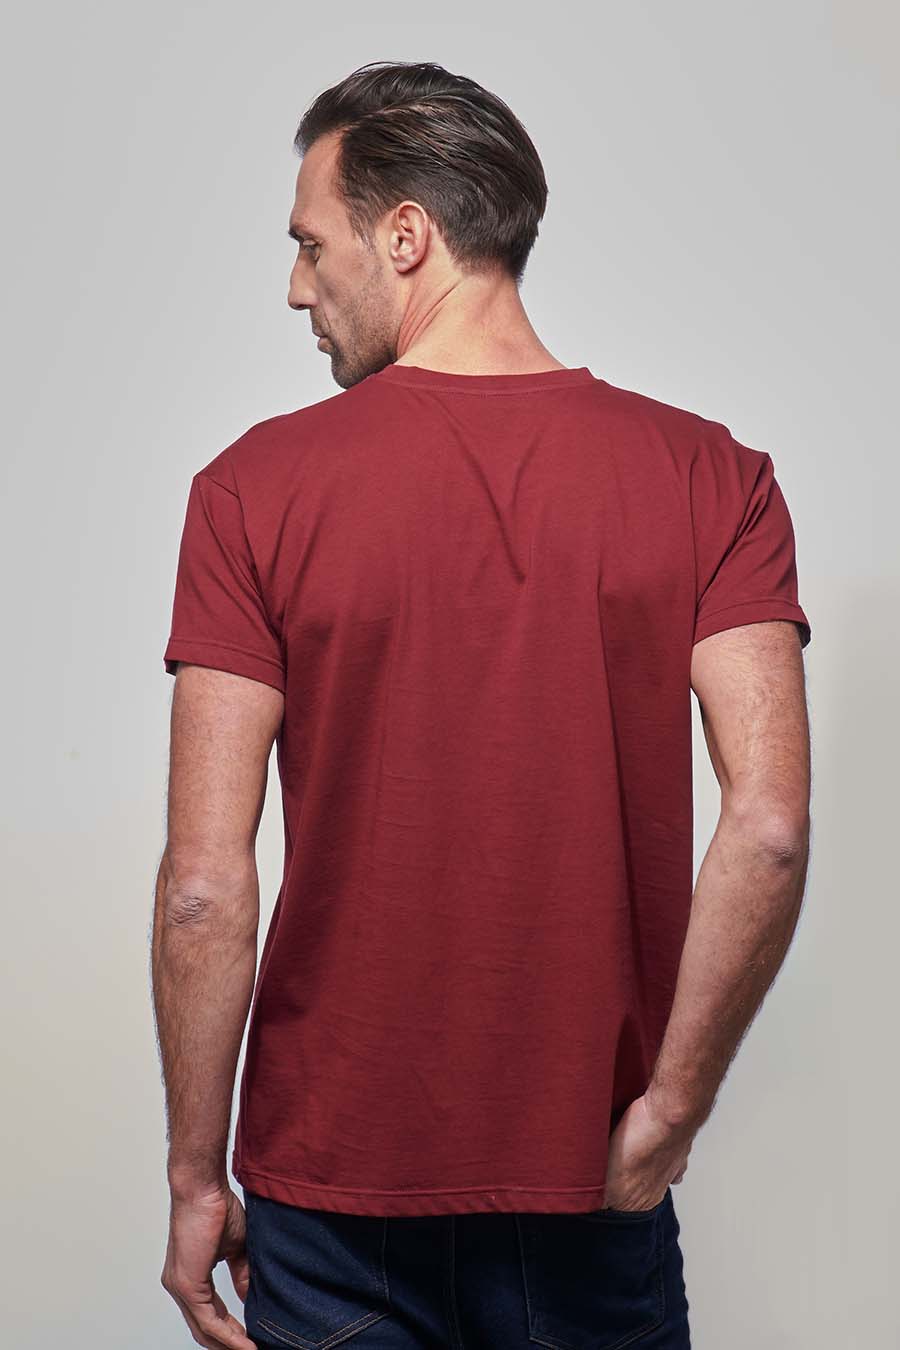 T-shirt homme classique made in France bordeaux - FIL ROUGE